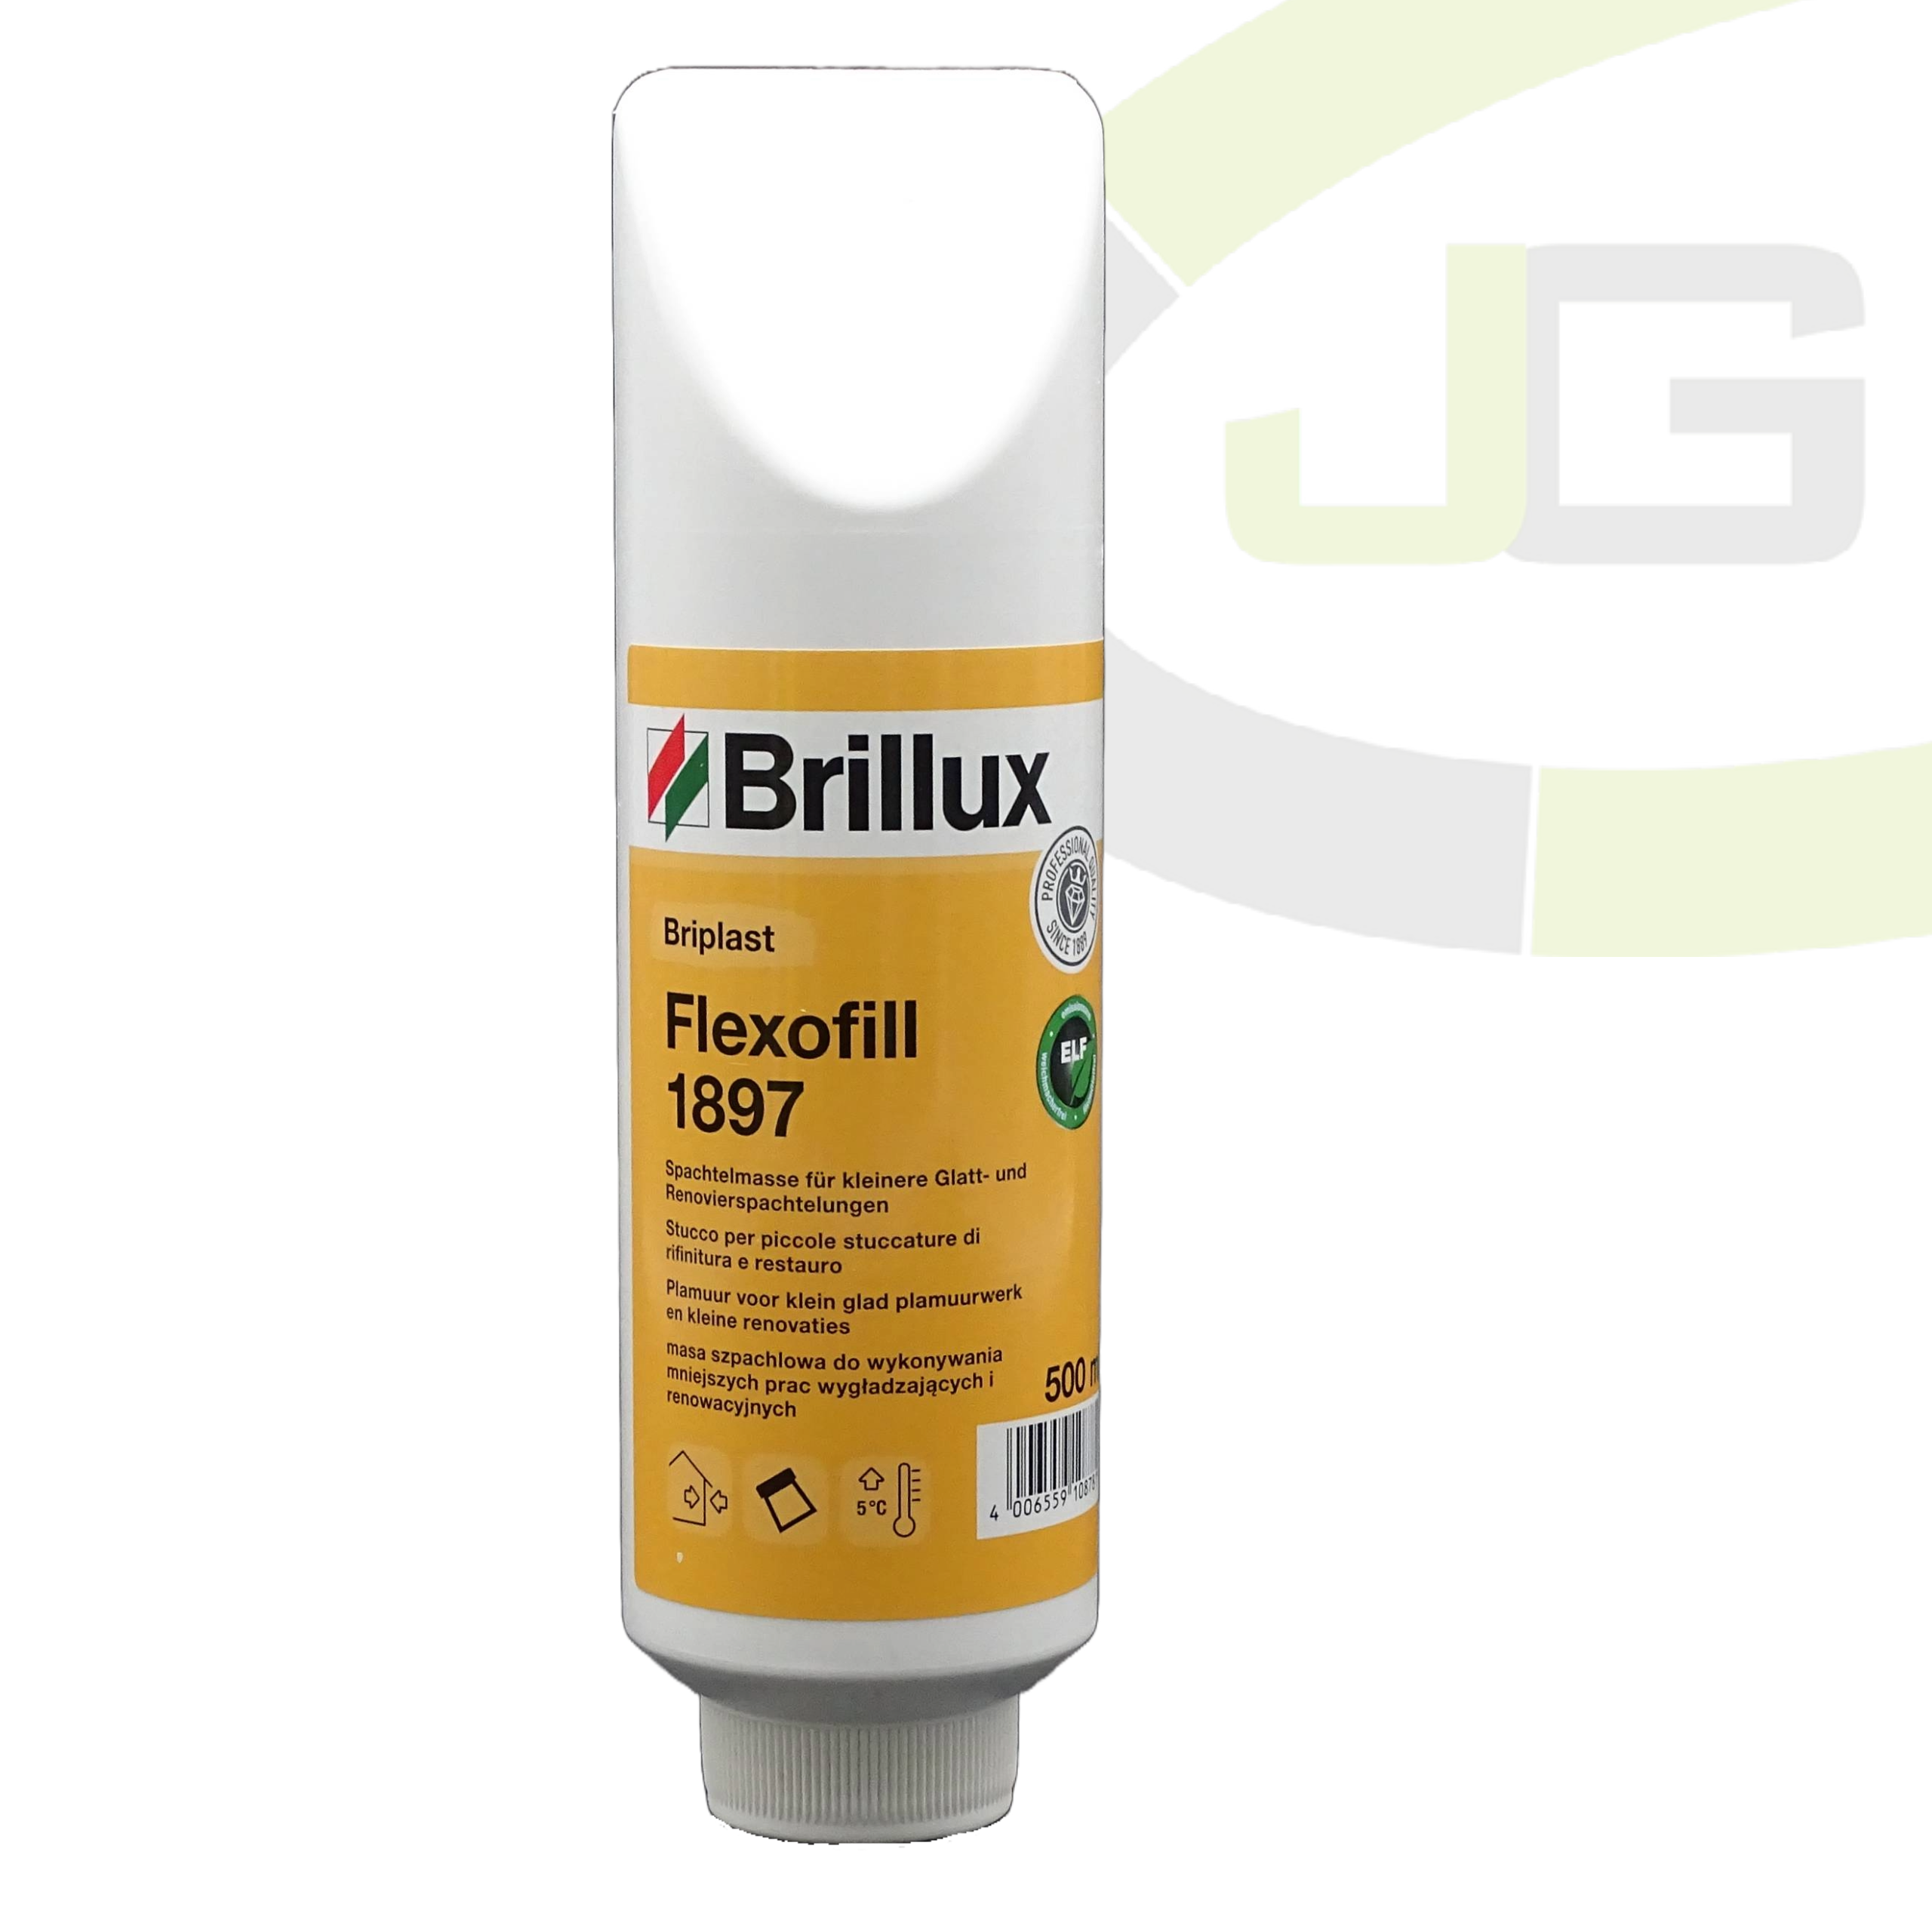 Brillux Flexofill 1897 / Tuben-Fertig-Spachtelmasse